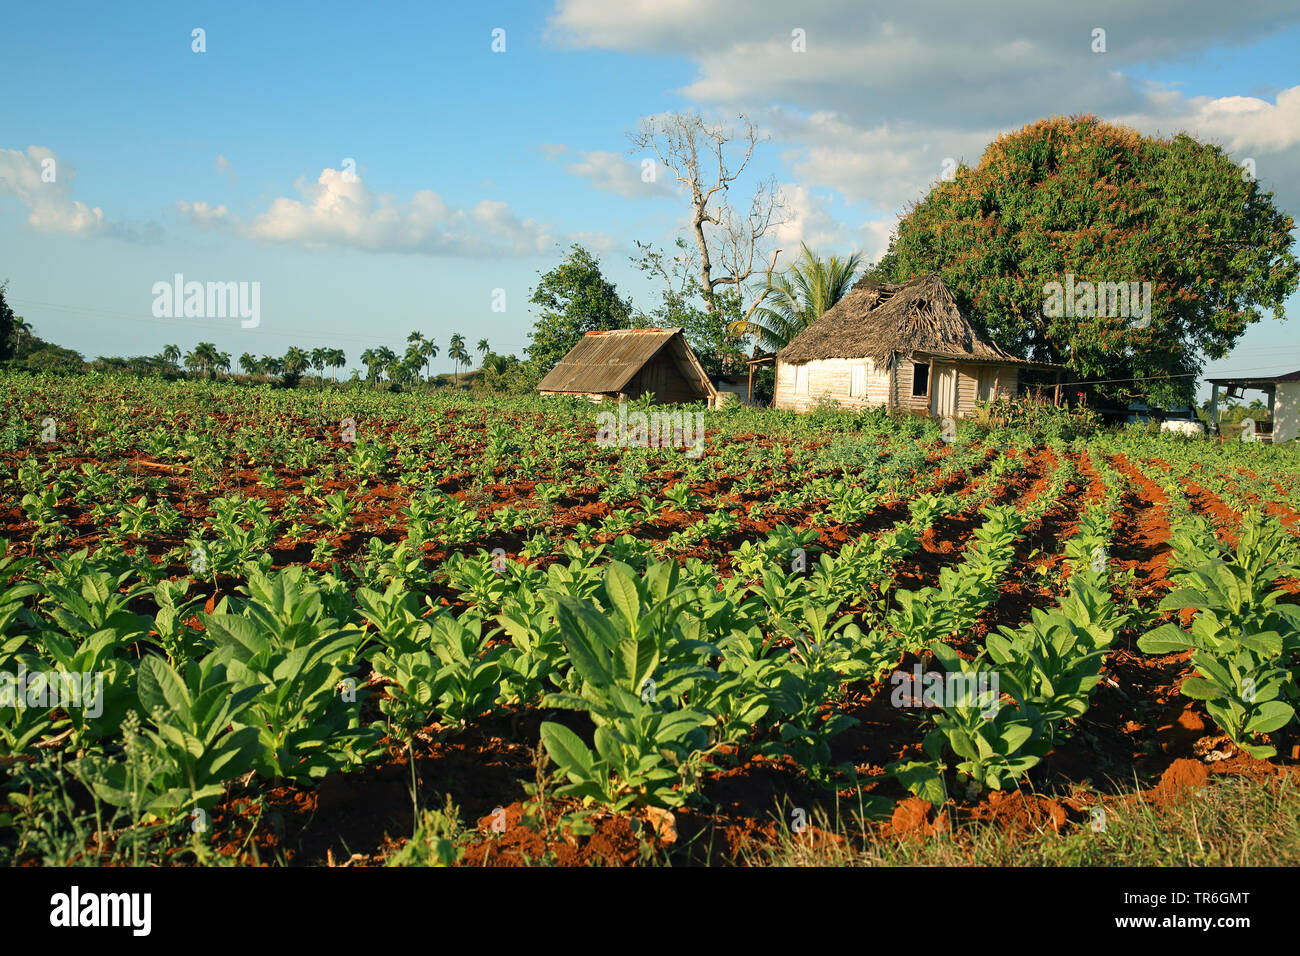 Tabac cultivé, tabac commun, le tabac (Nicotiana tabacum), champ de tabac, Cuba Banque D'Images